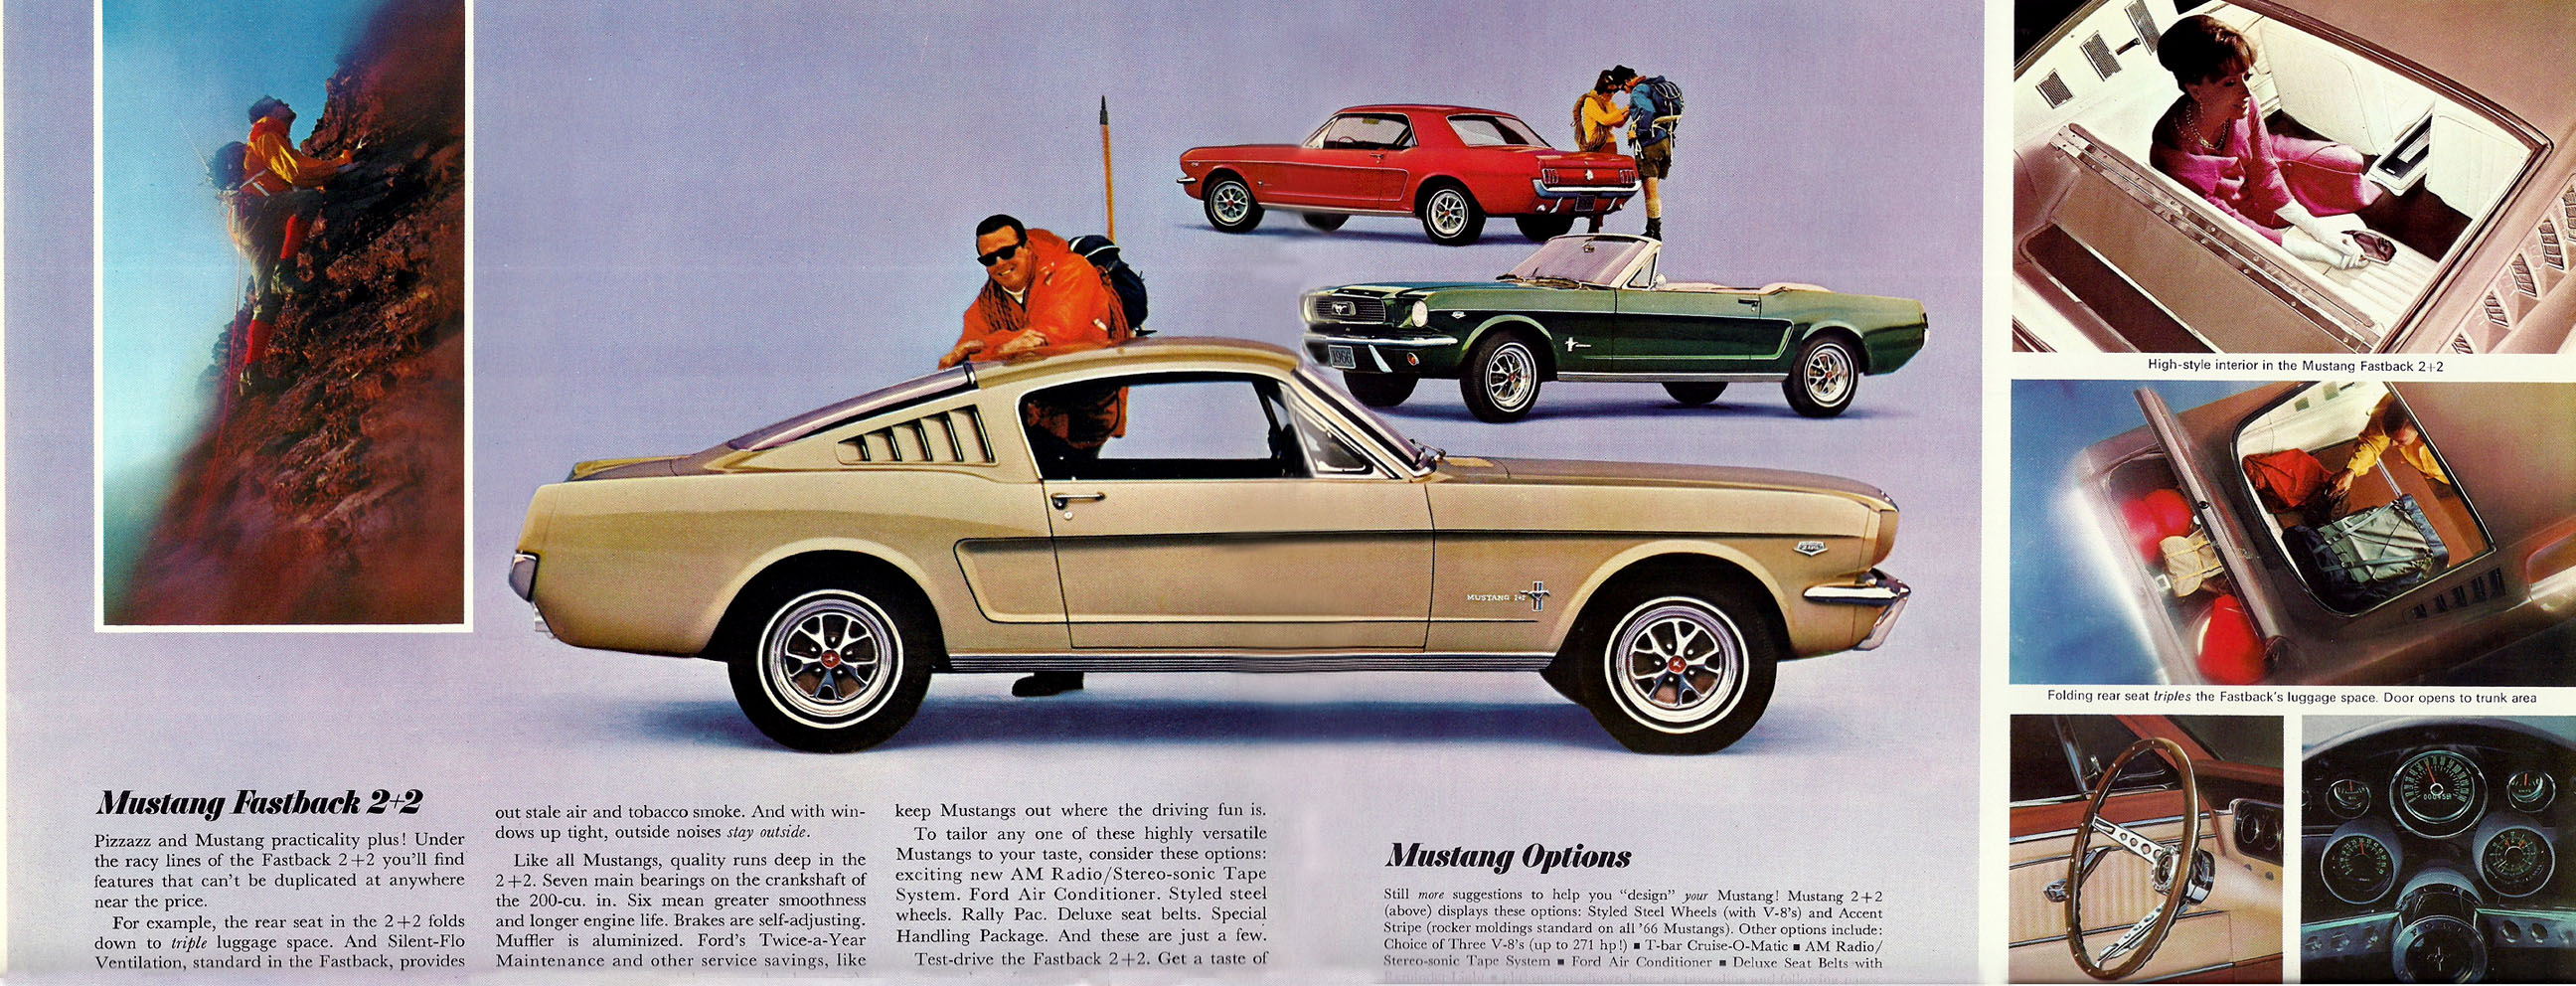 1966 Mustang Prospekt Page 8-9